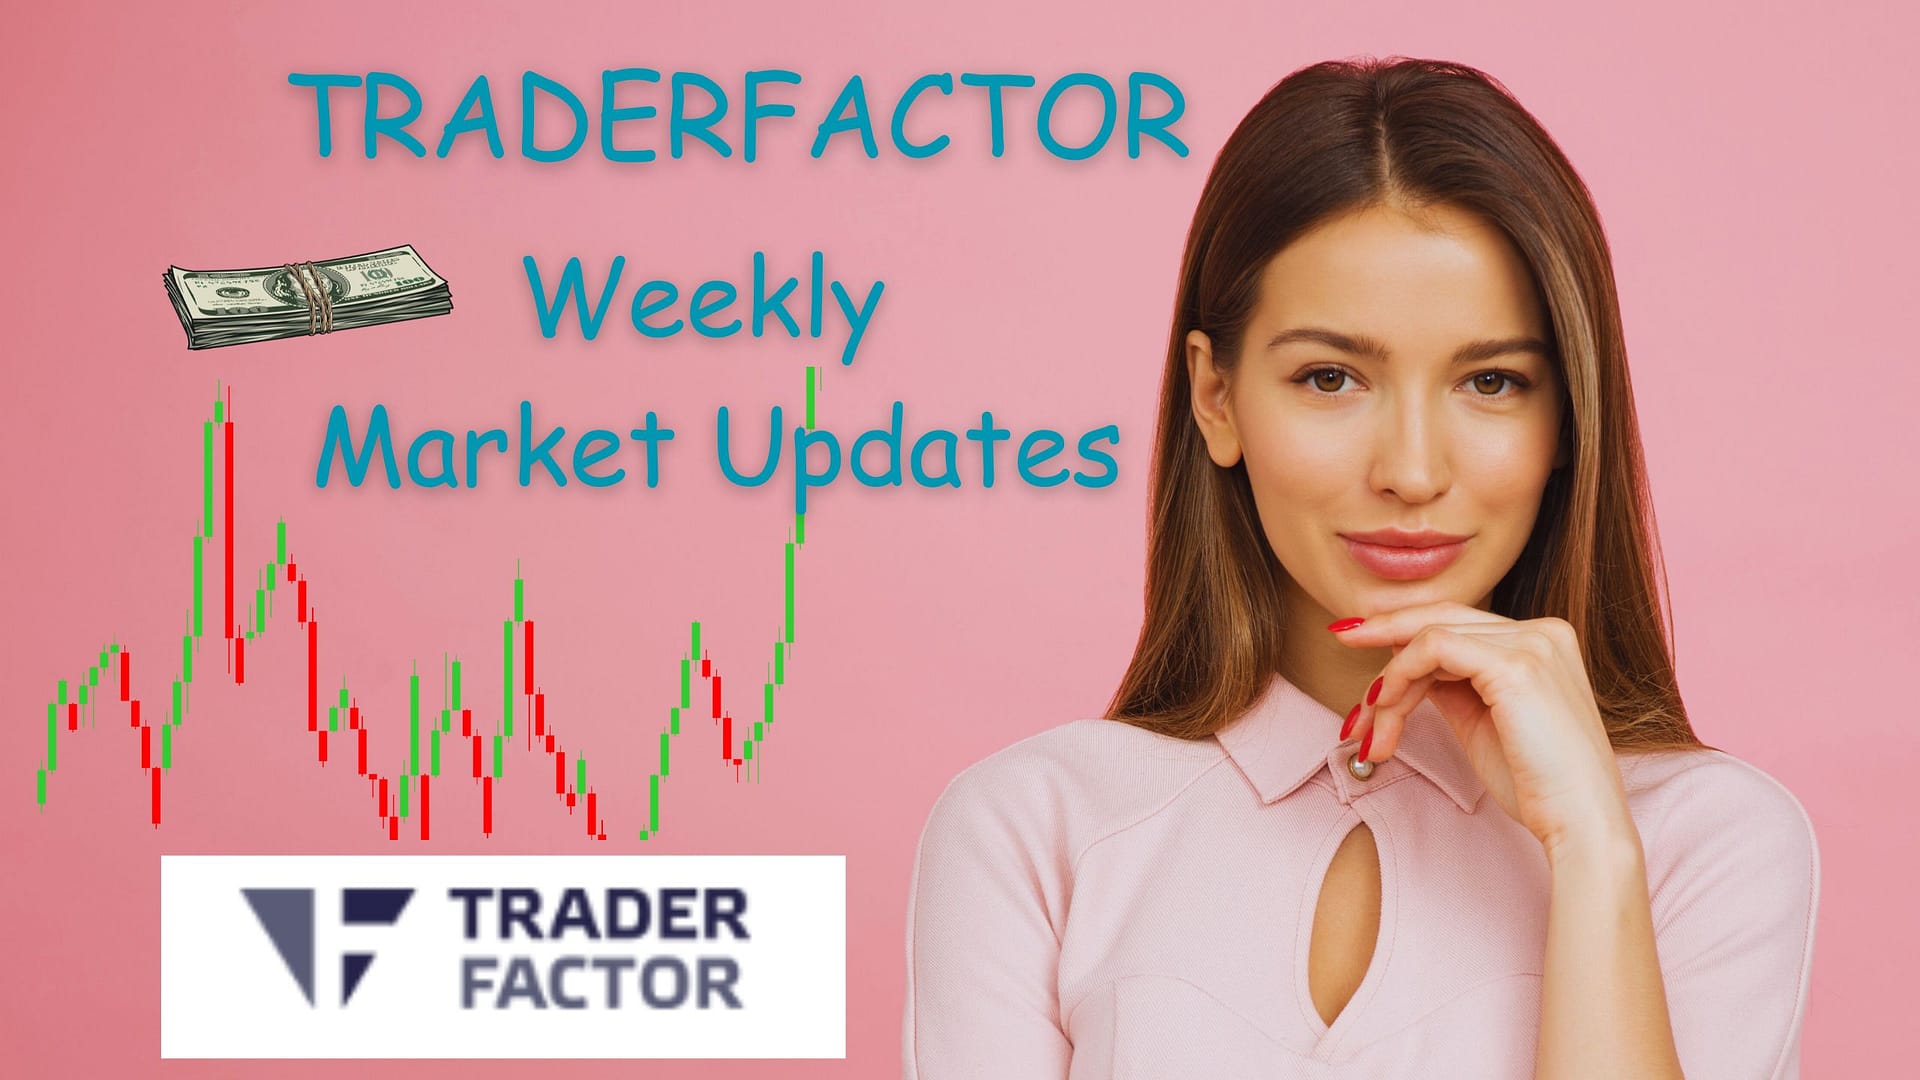 Weekly Market Updates in Trader Factor